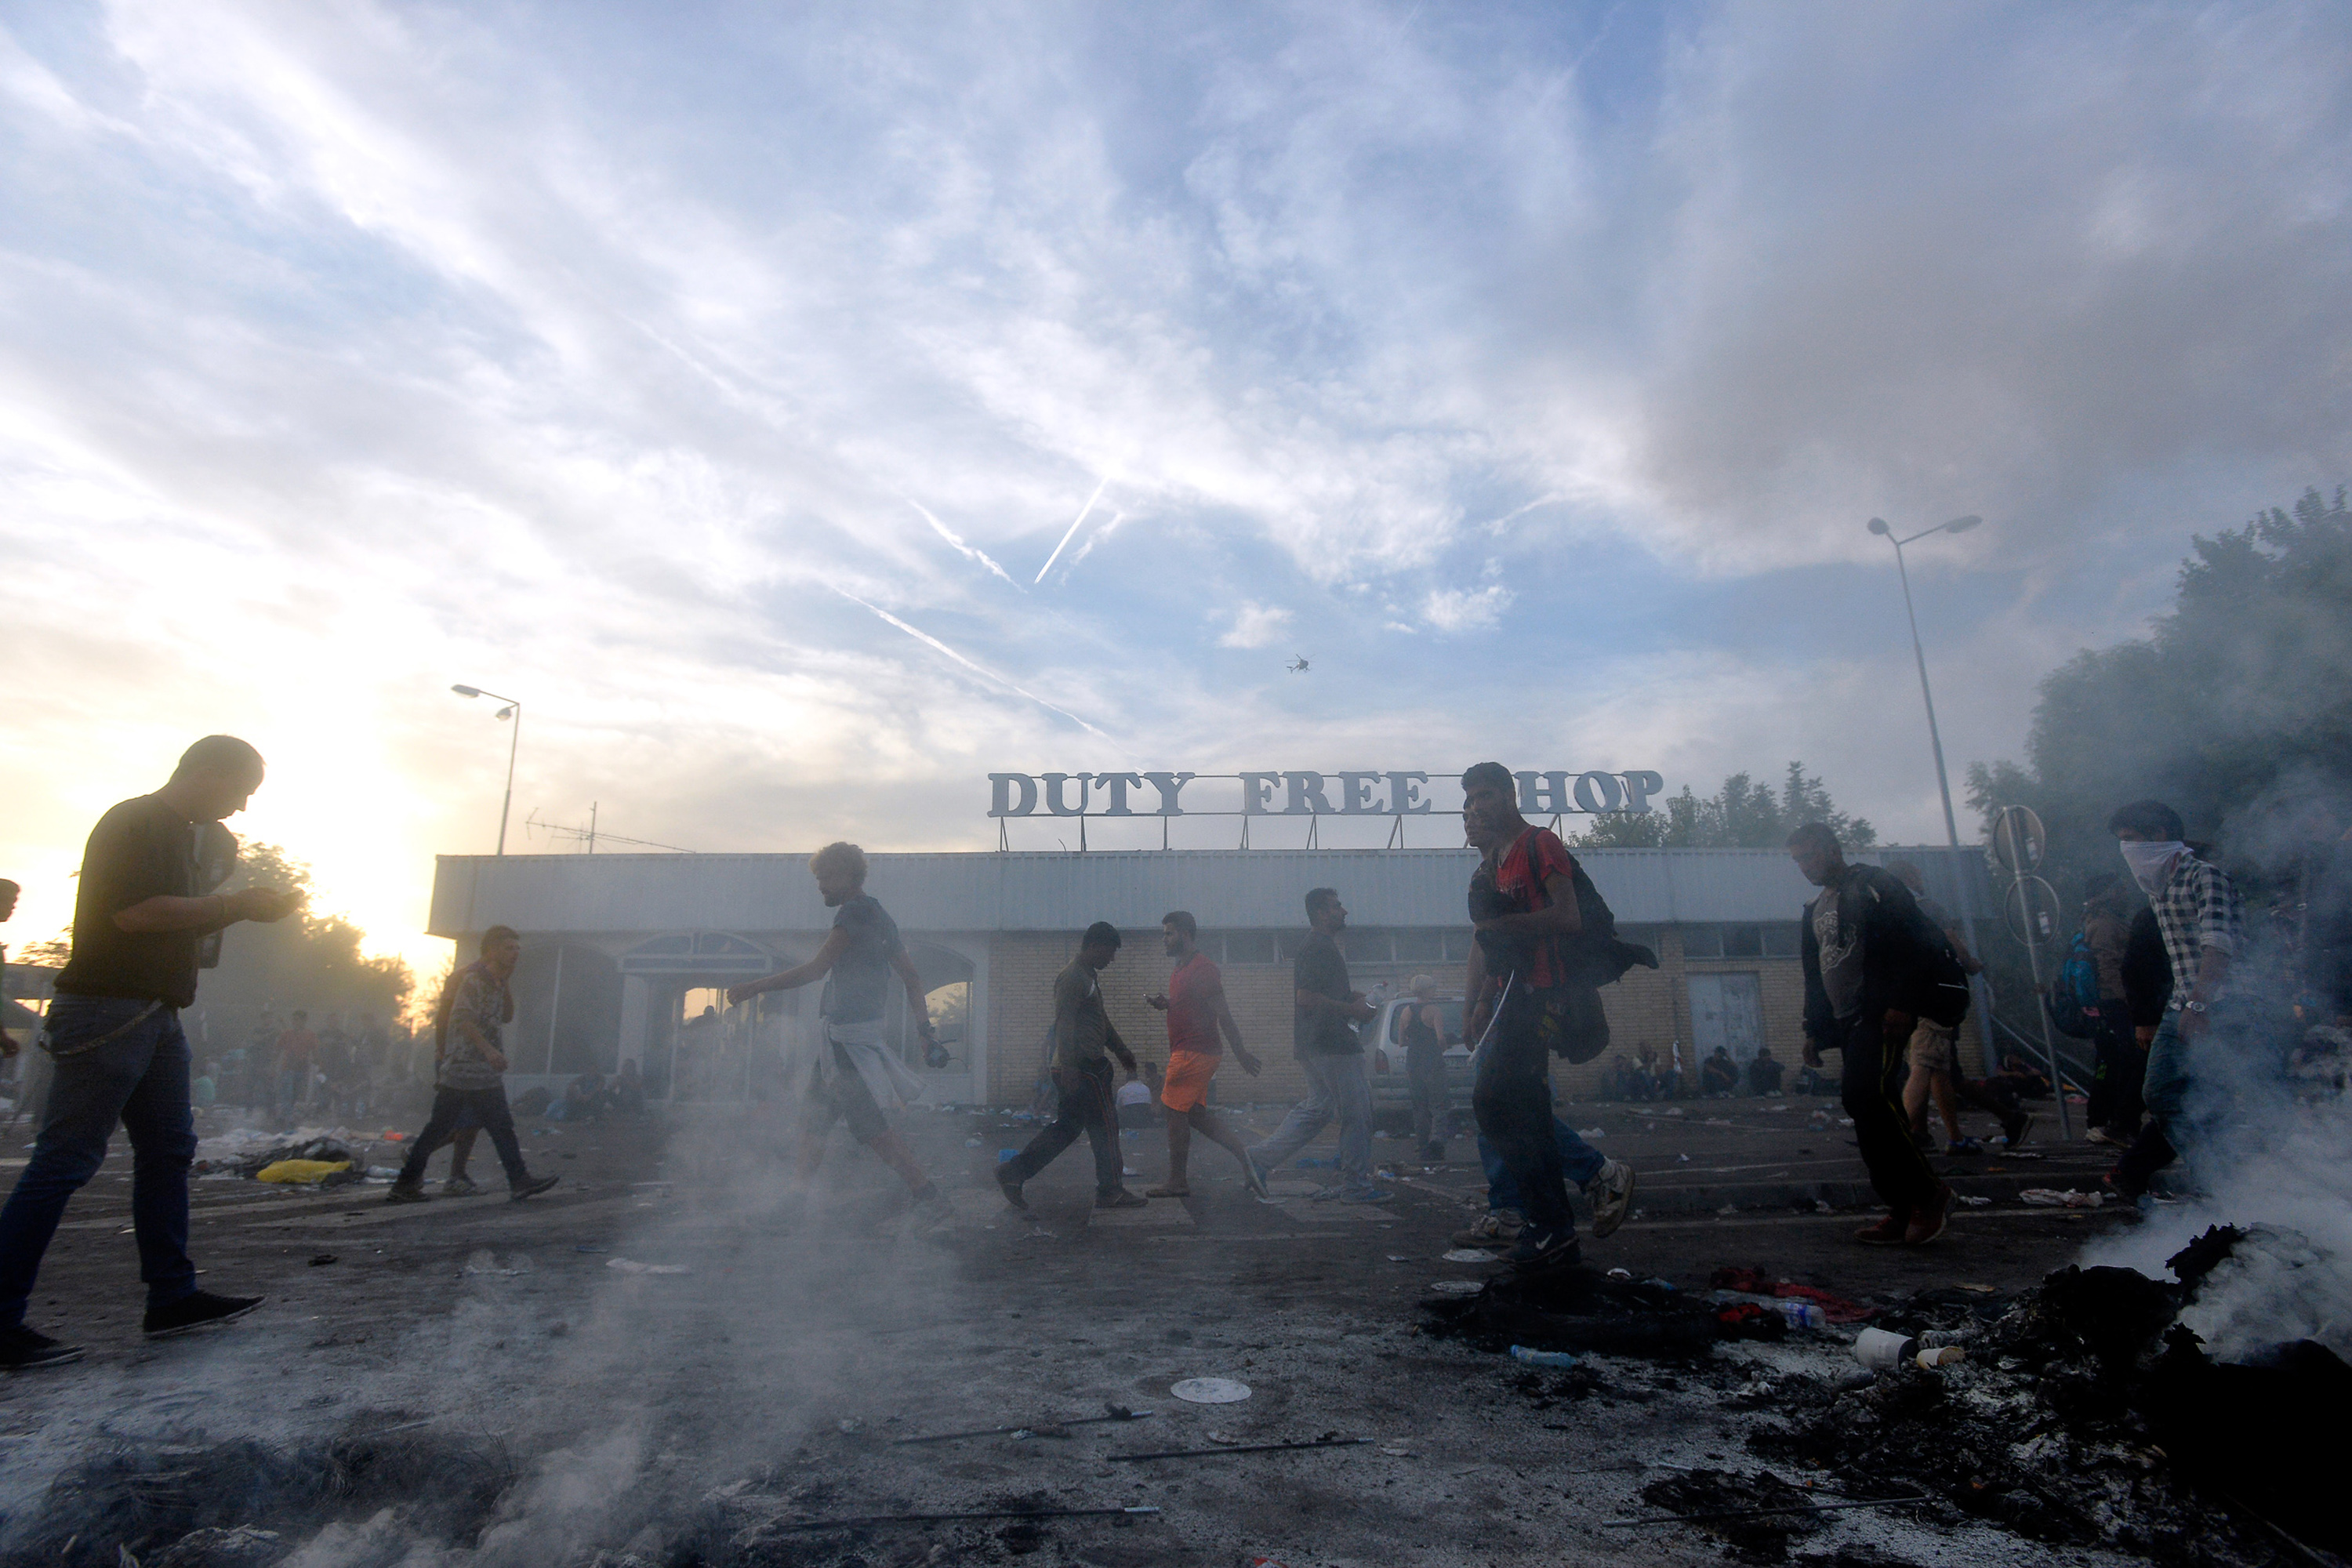 Clashes between Hungarian police and migrants erupted at the Horgosh border crossing. Photo by Nemanja Jovanovic / Kamerades